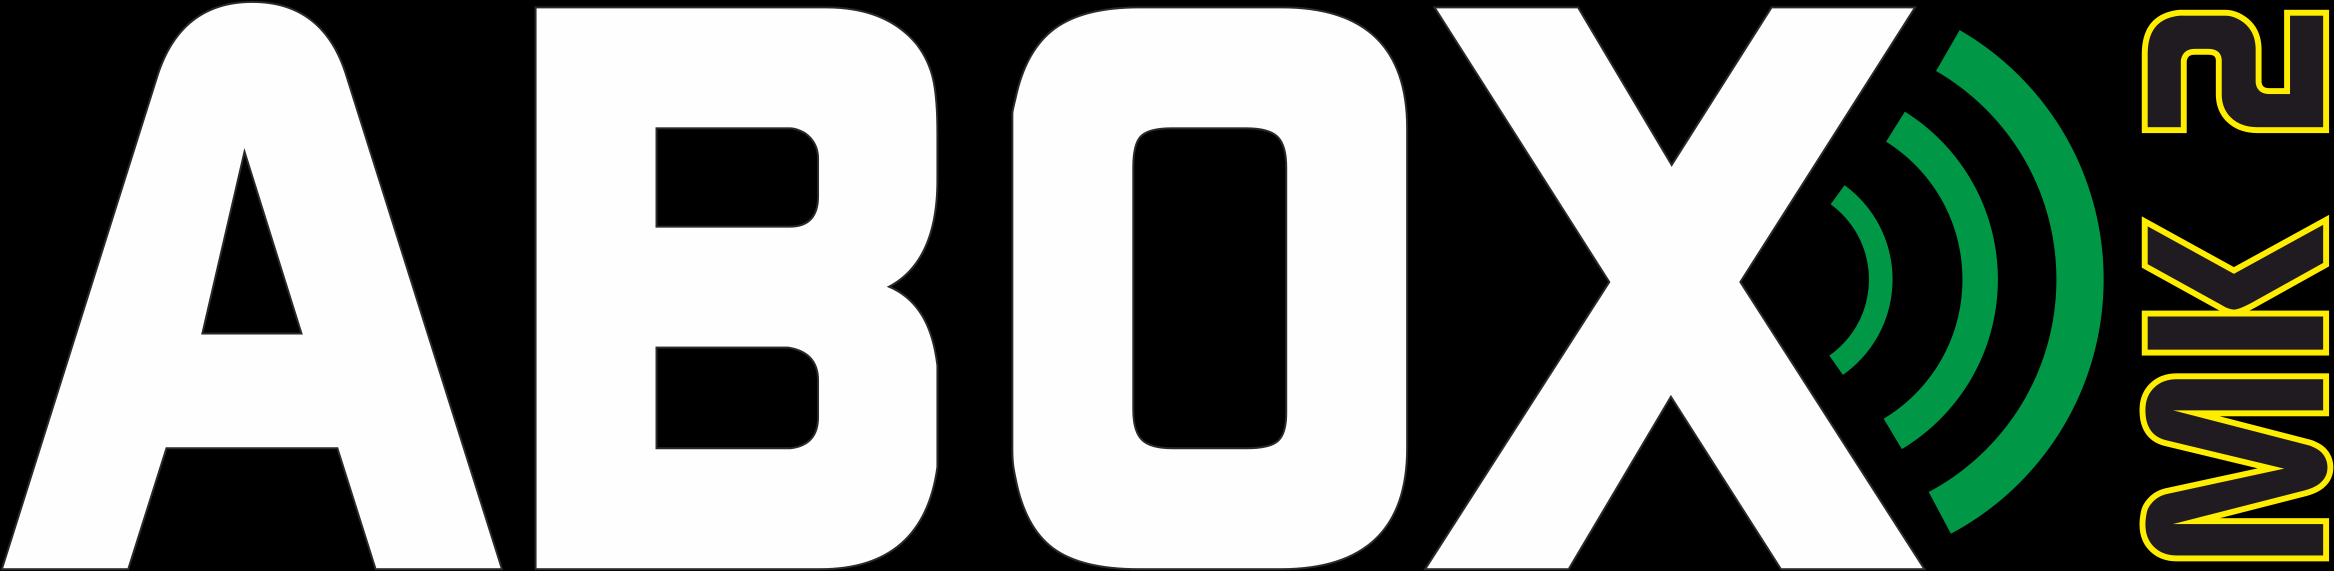 ABox 2020 Logo